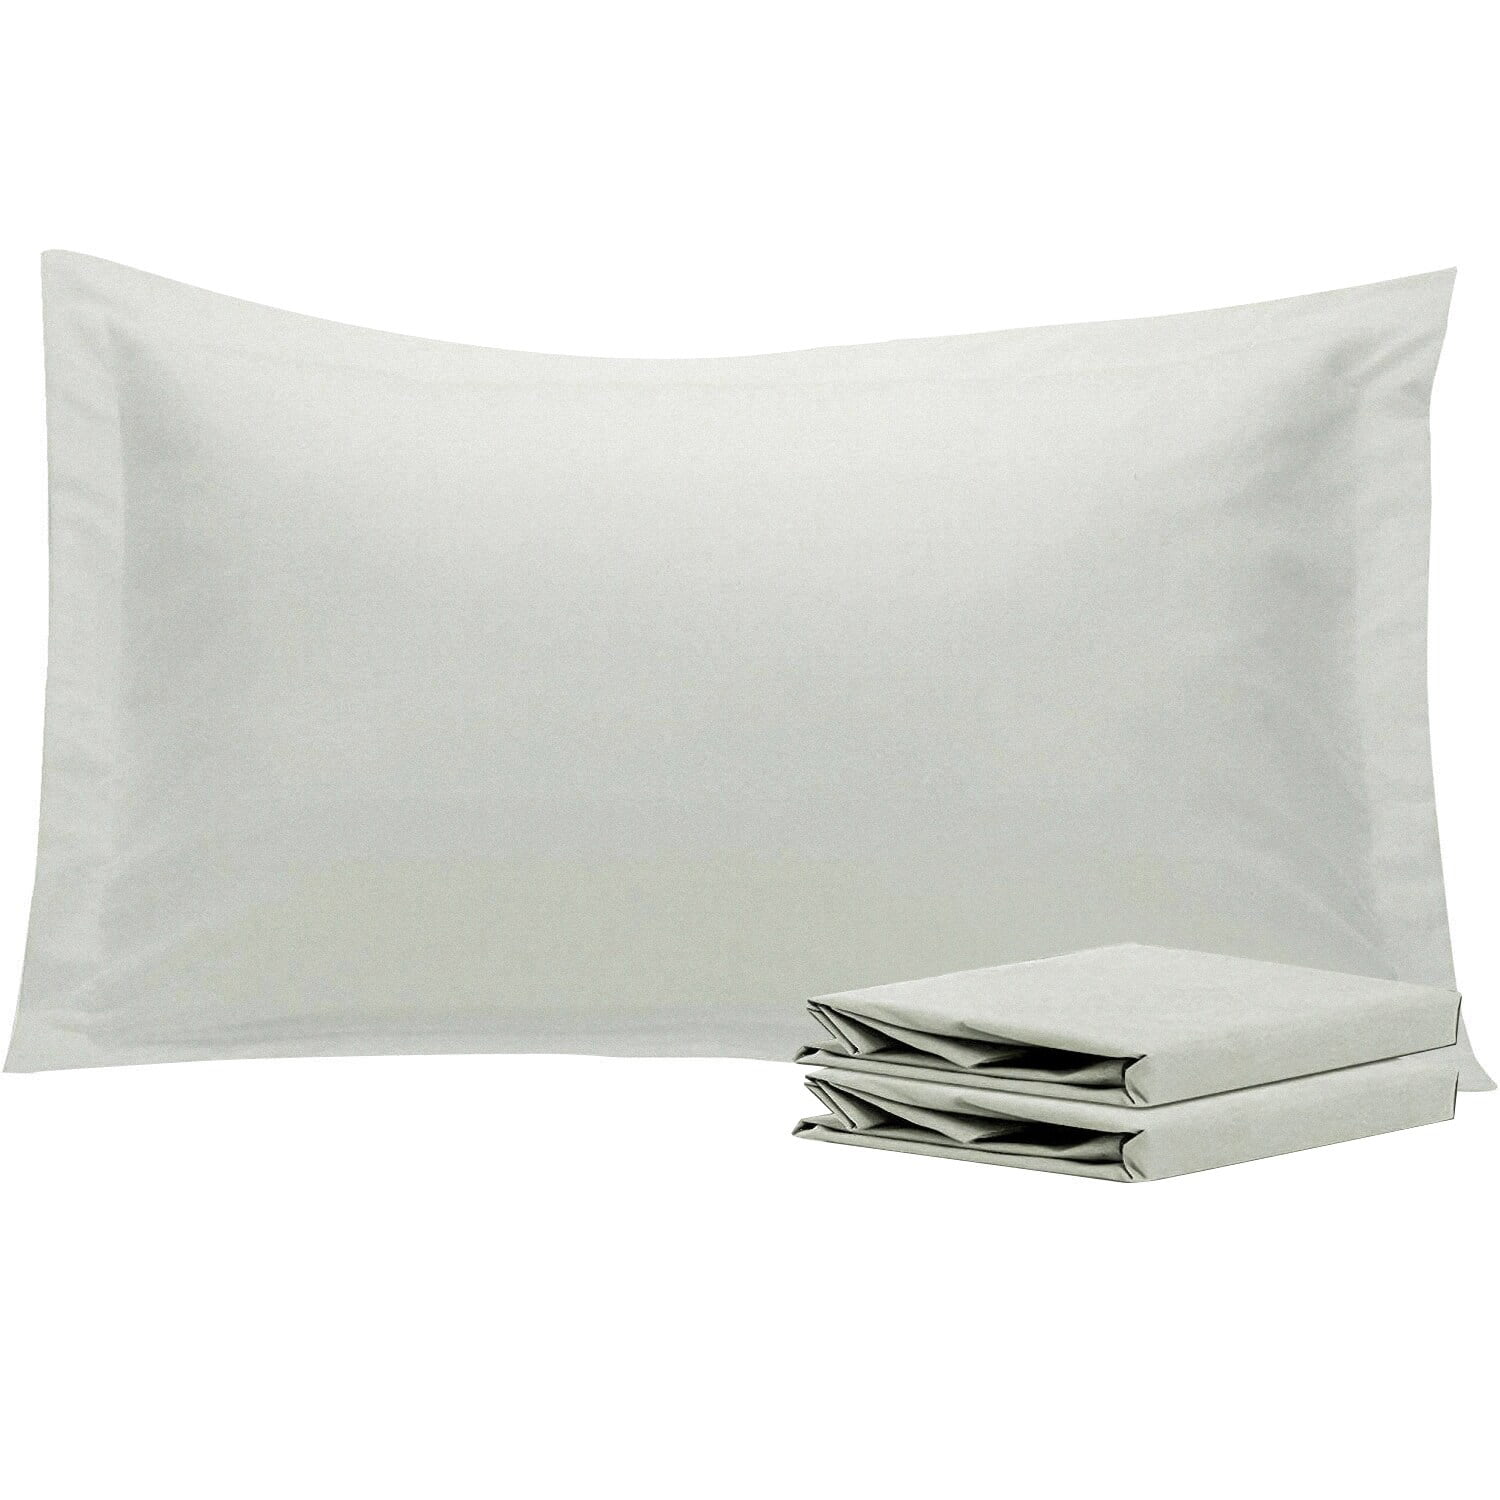 Details about   Microfiber 2 Piece Pillow Shams King Queen Standard Ultra Soft Cushion Cover 